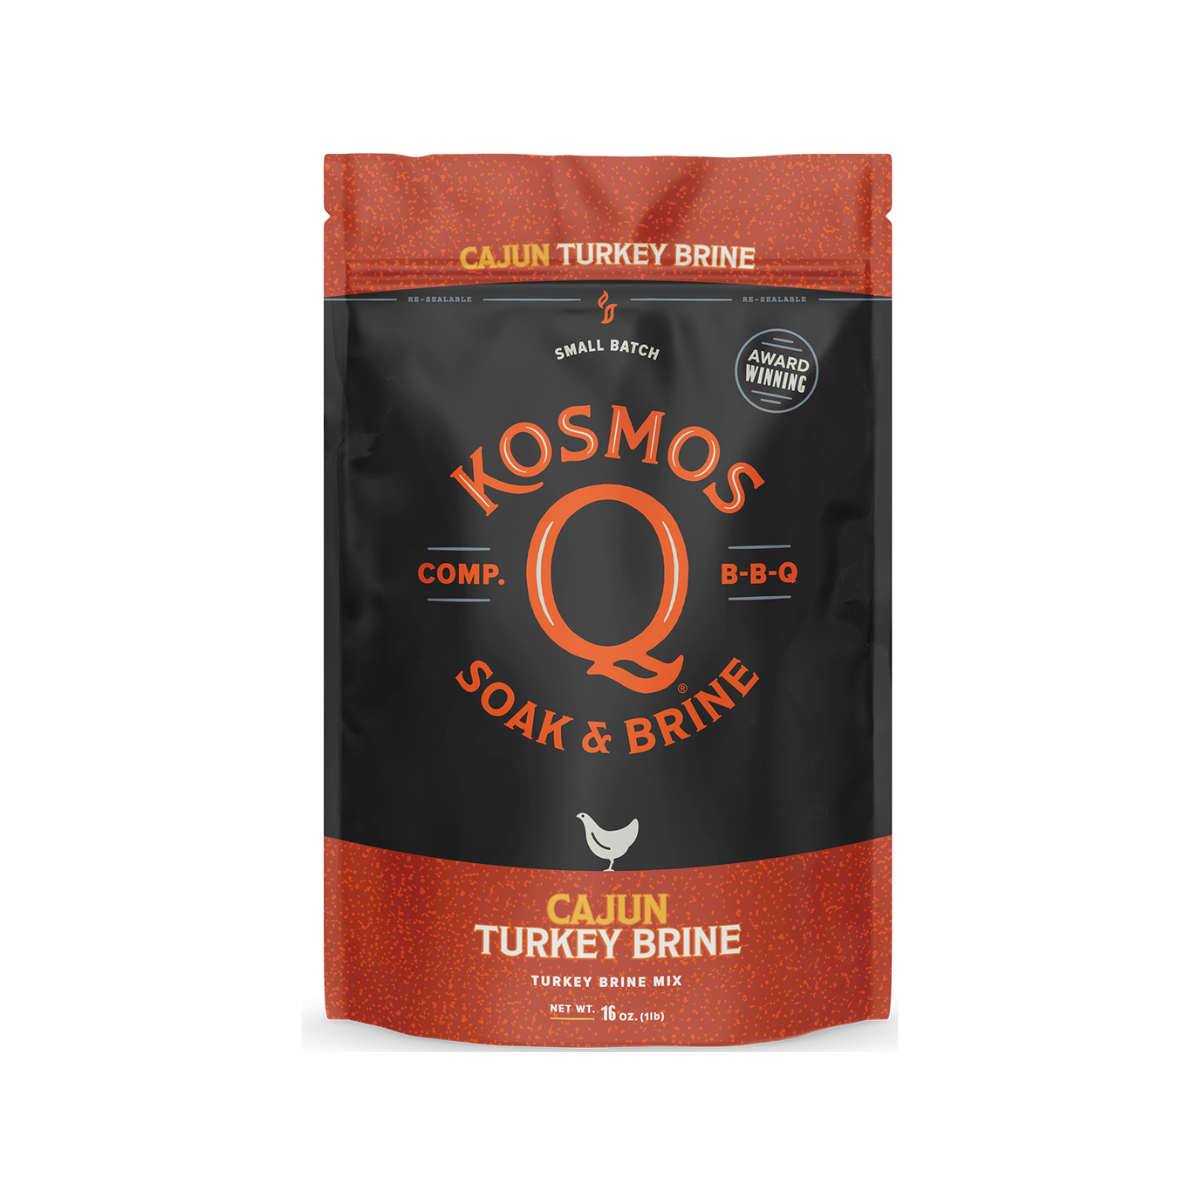 Kosmo's Q Brines and Soaks Cajun Turkey Brine